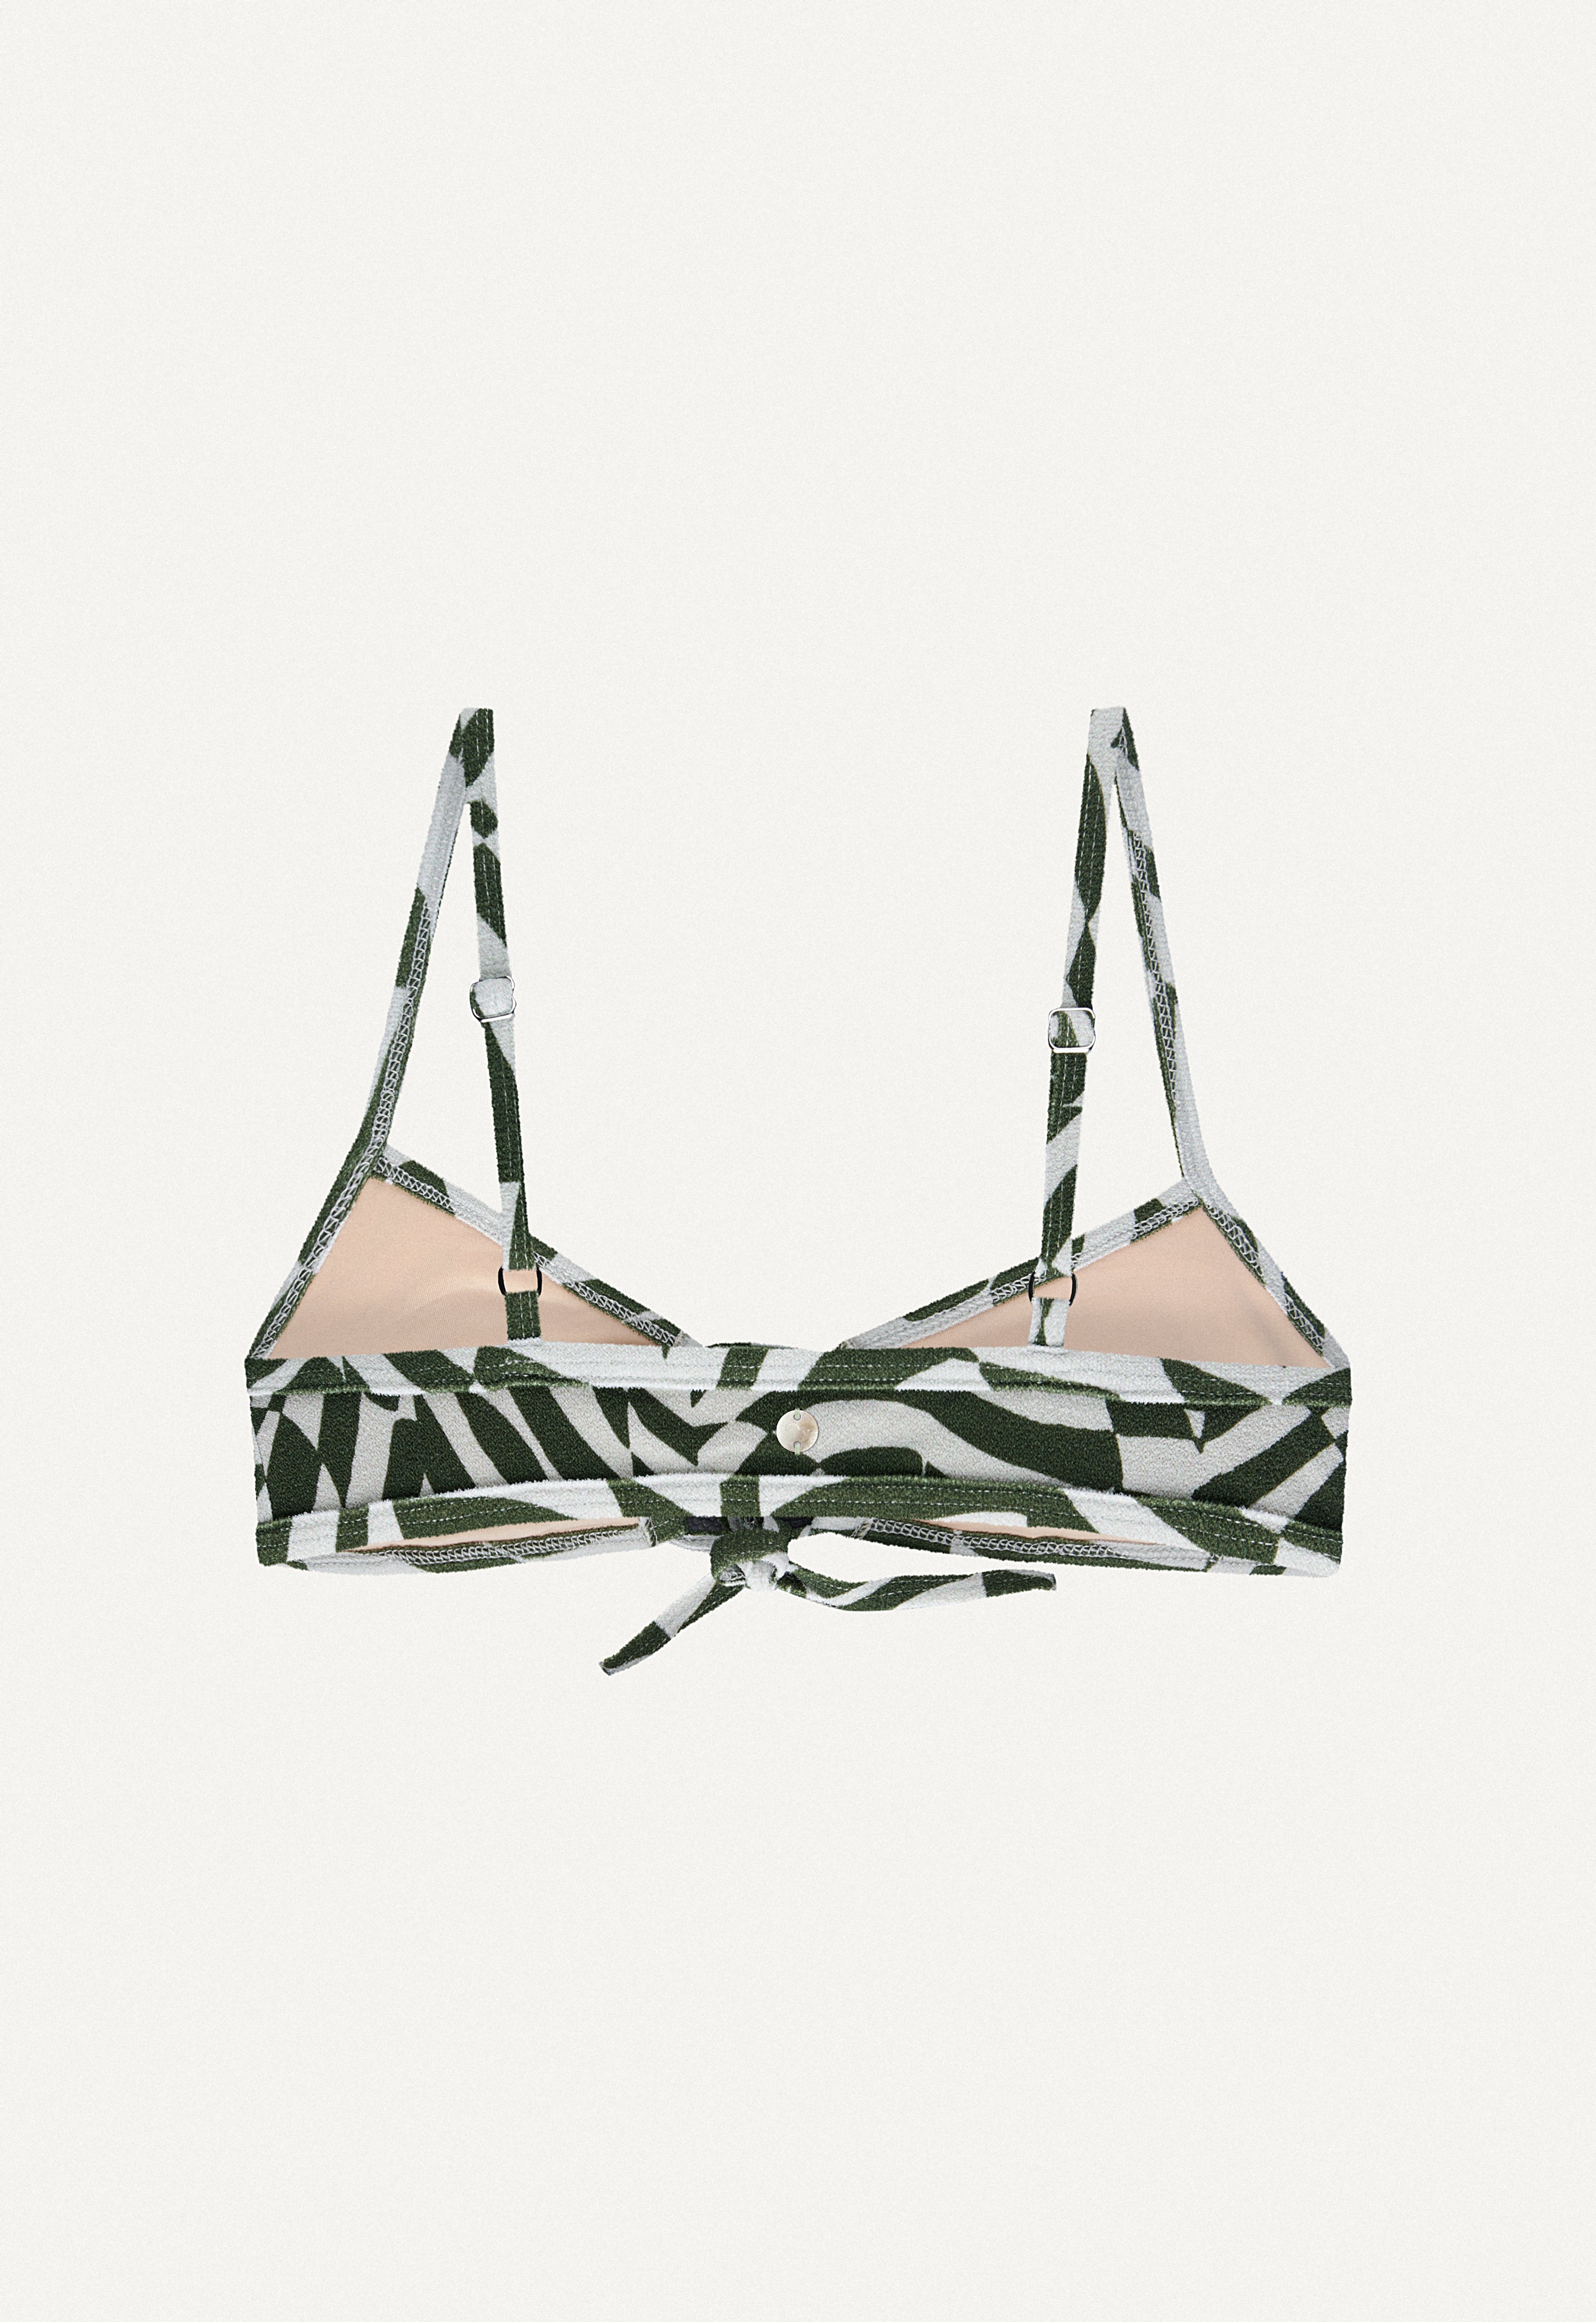 Oy-bikini-oberteil-A23-swimwear-Joran-zebra-print-frottee-back.jpg